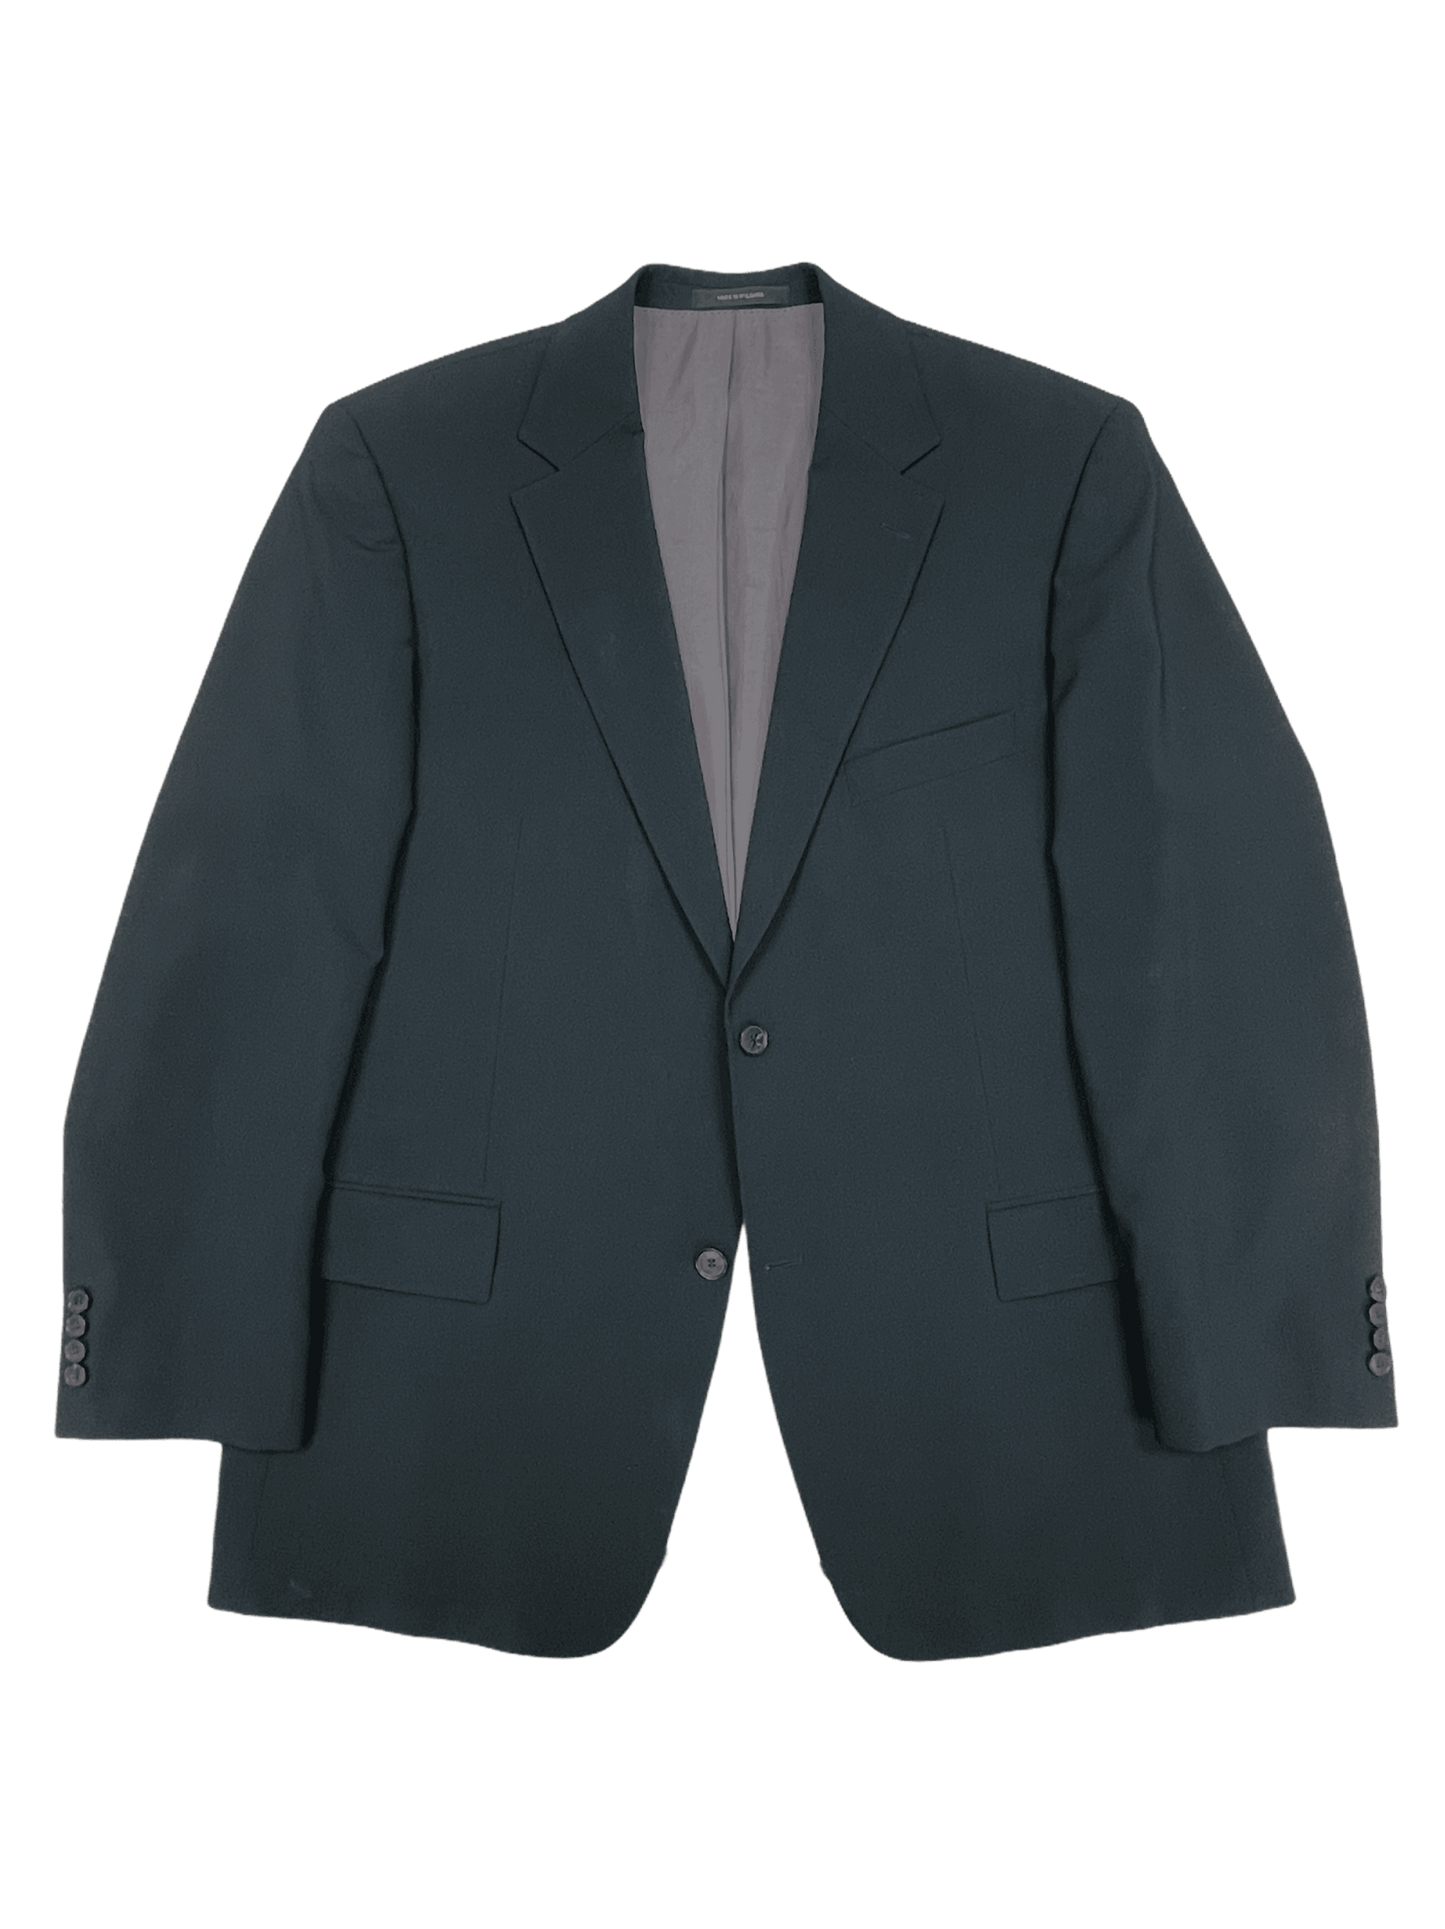 Hugo Boss Navy Blue Wool 46R Sport Coat - XL—Genuine Design luxury consignment